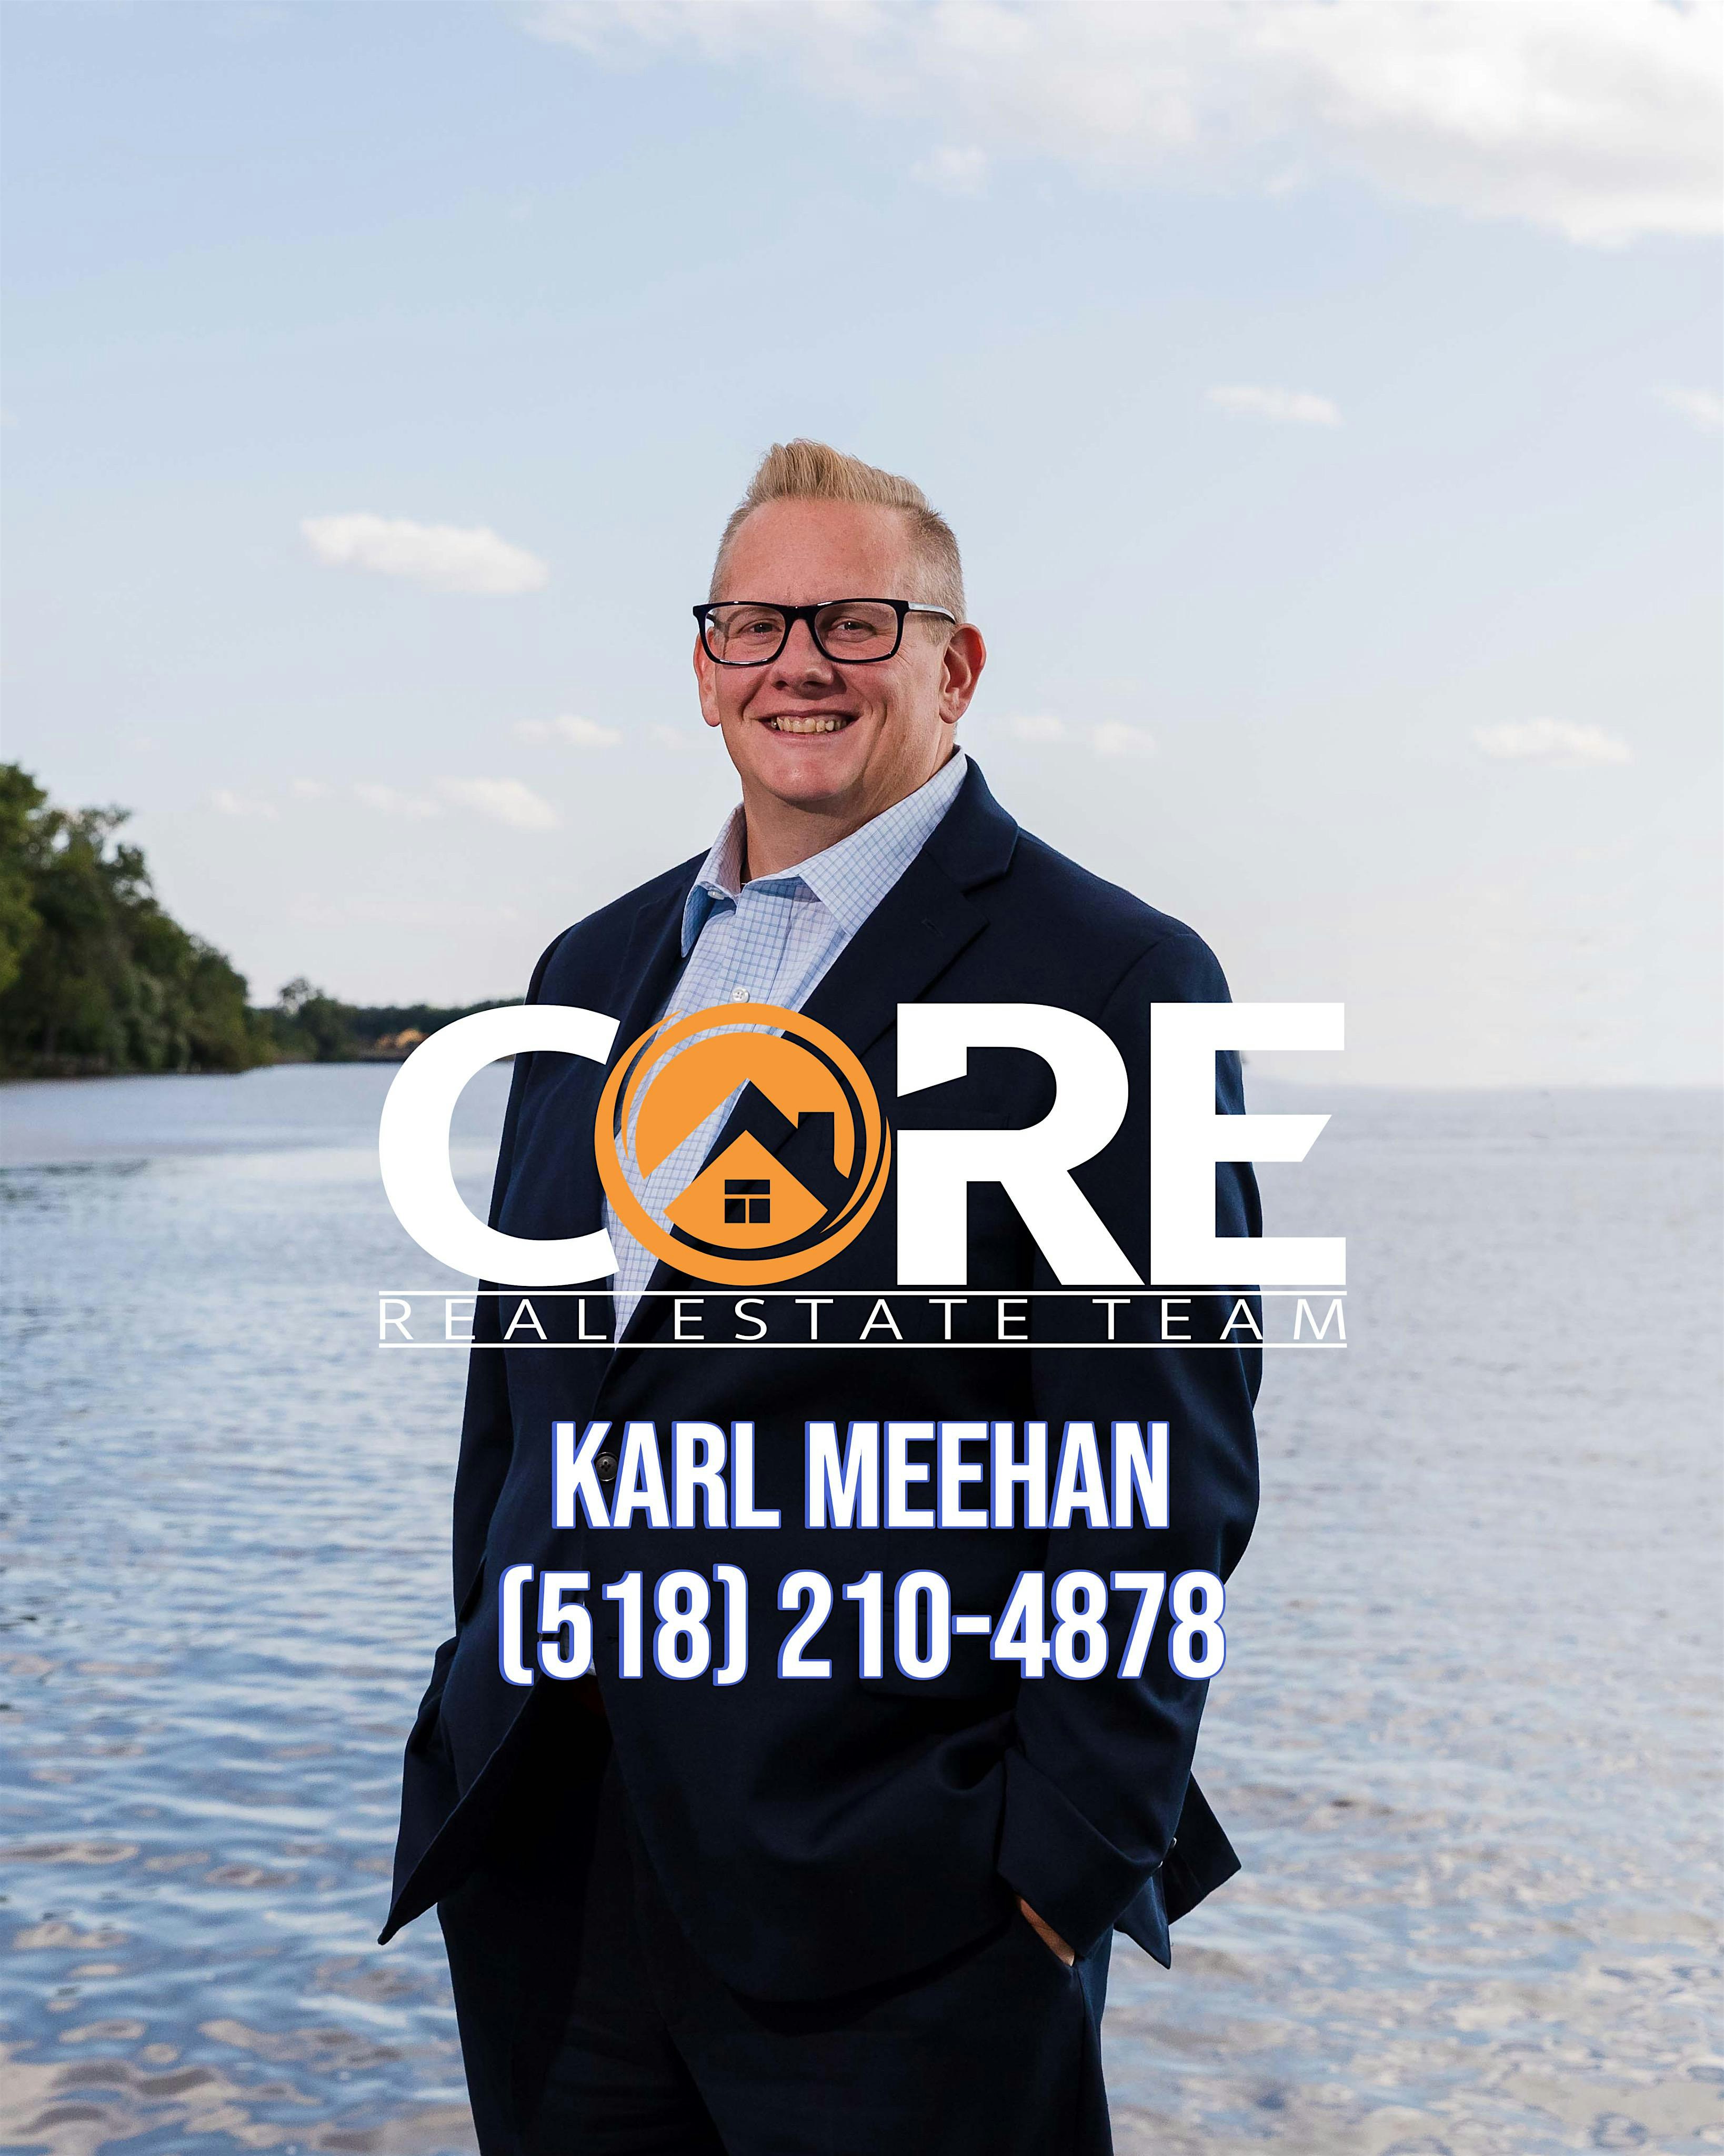 Karl Meehan - Core Real Estate Team